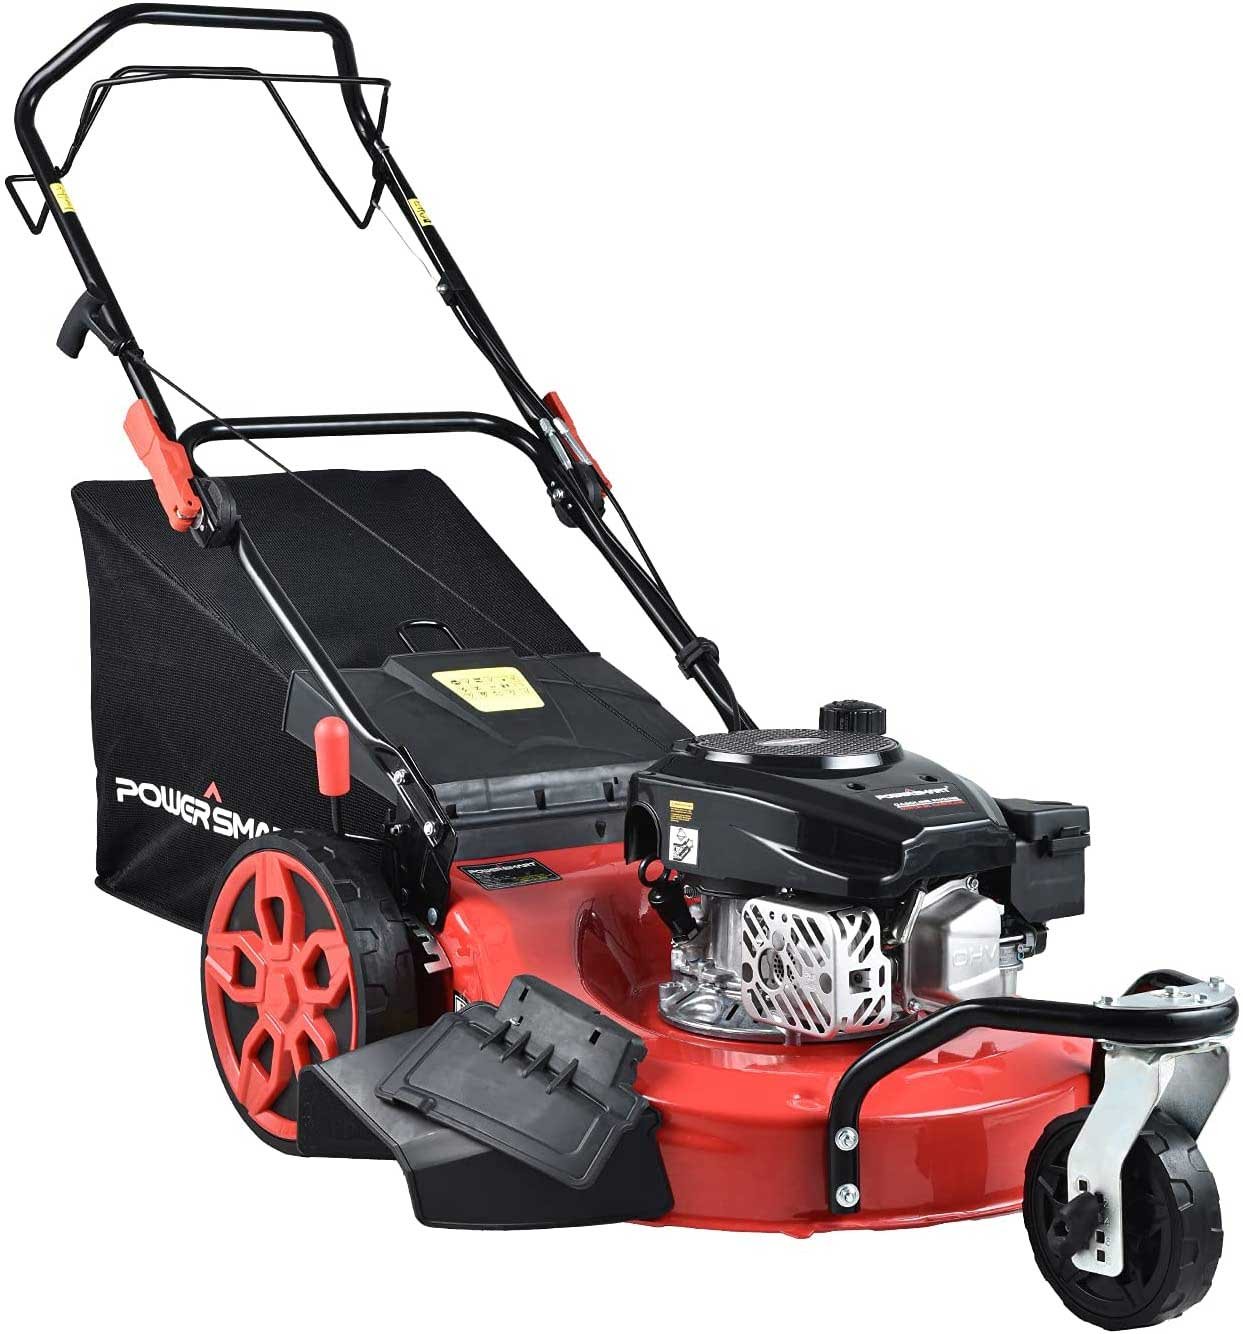 PowerSmart Lawn Mower, 20-inch & 170CC, Gas Powered Lawn Mower